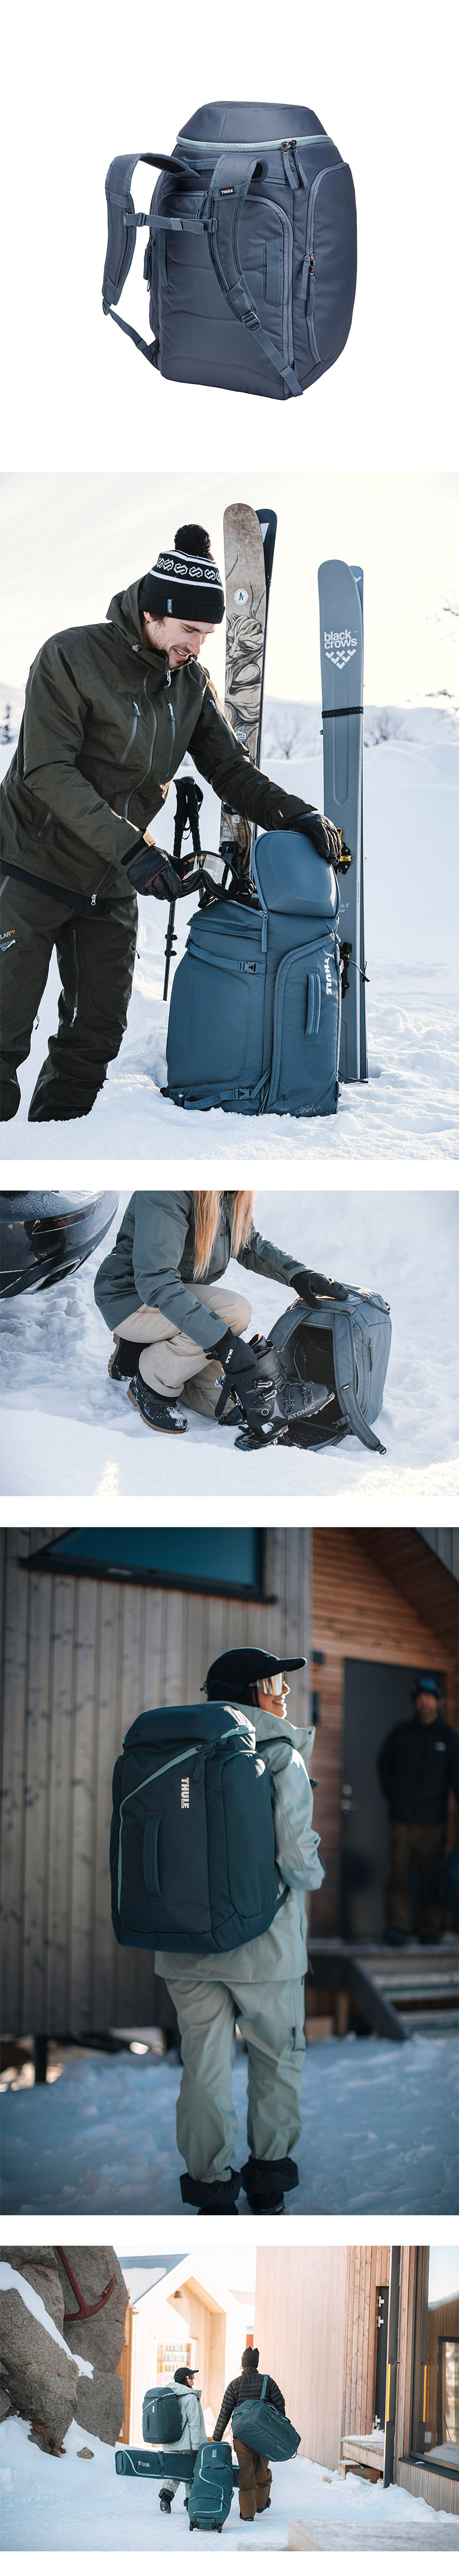 RoundTrip-Snow-Backpack-60L-004.jpg